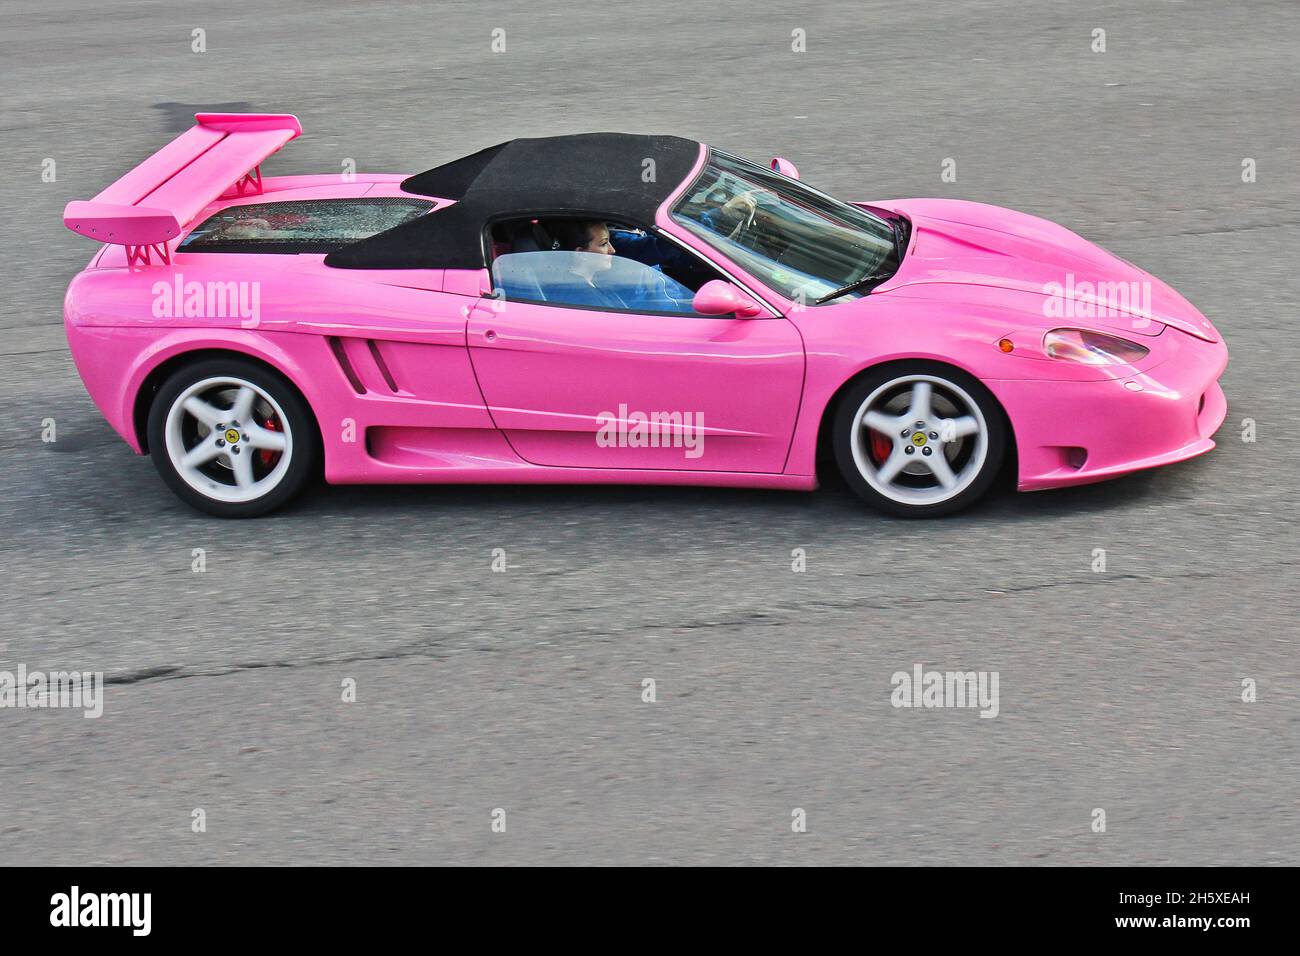 Kiev, Ukraine - April 18, 2015: Pink exclusive supercar Ferrari Modena F360 Spider Sbarro GT8. Tuning car Stock Photo